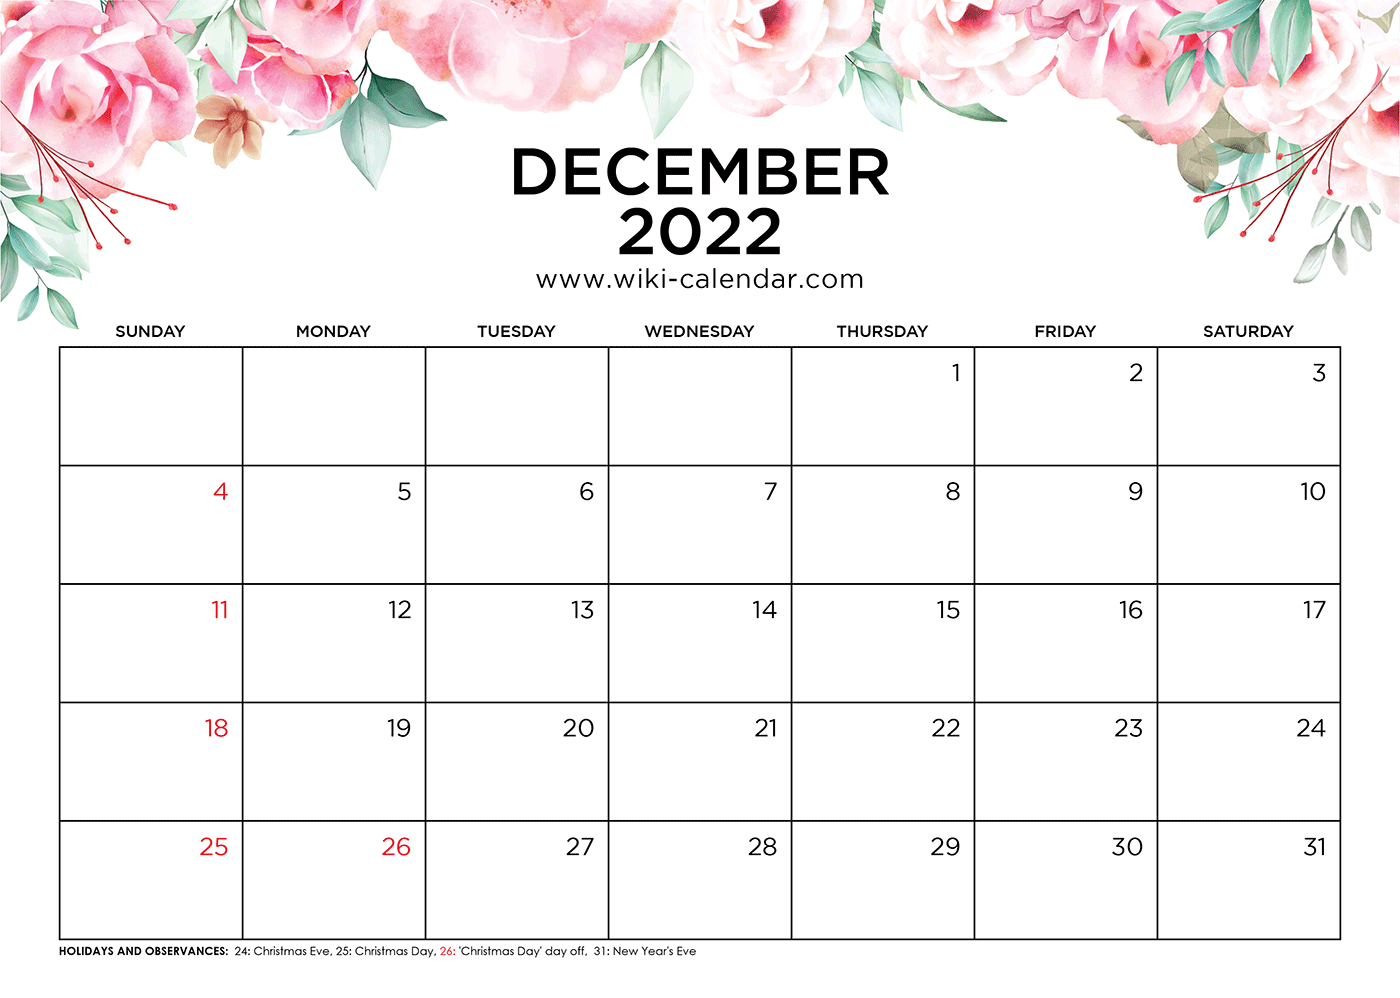 October 2022 Calendar To Print Free Printable December 2022 Calendars - Wiki Calendar